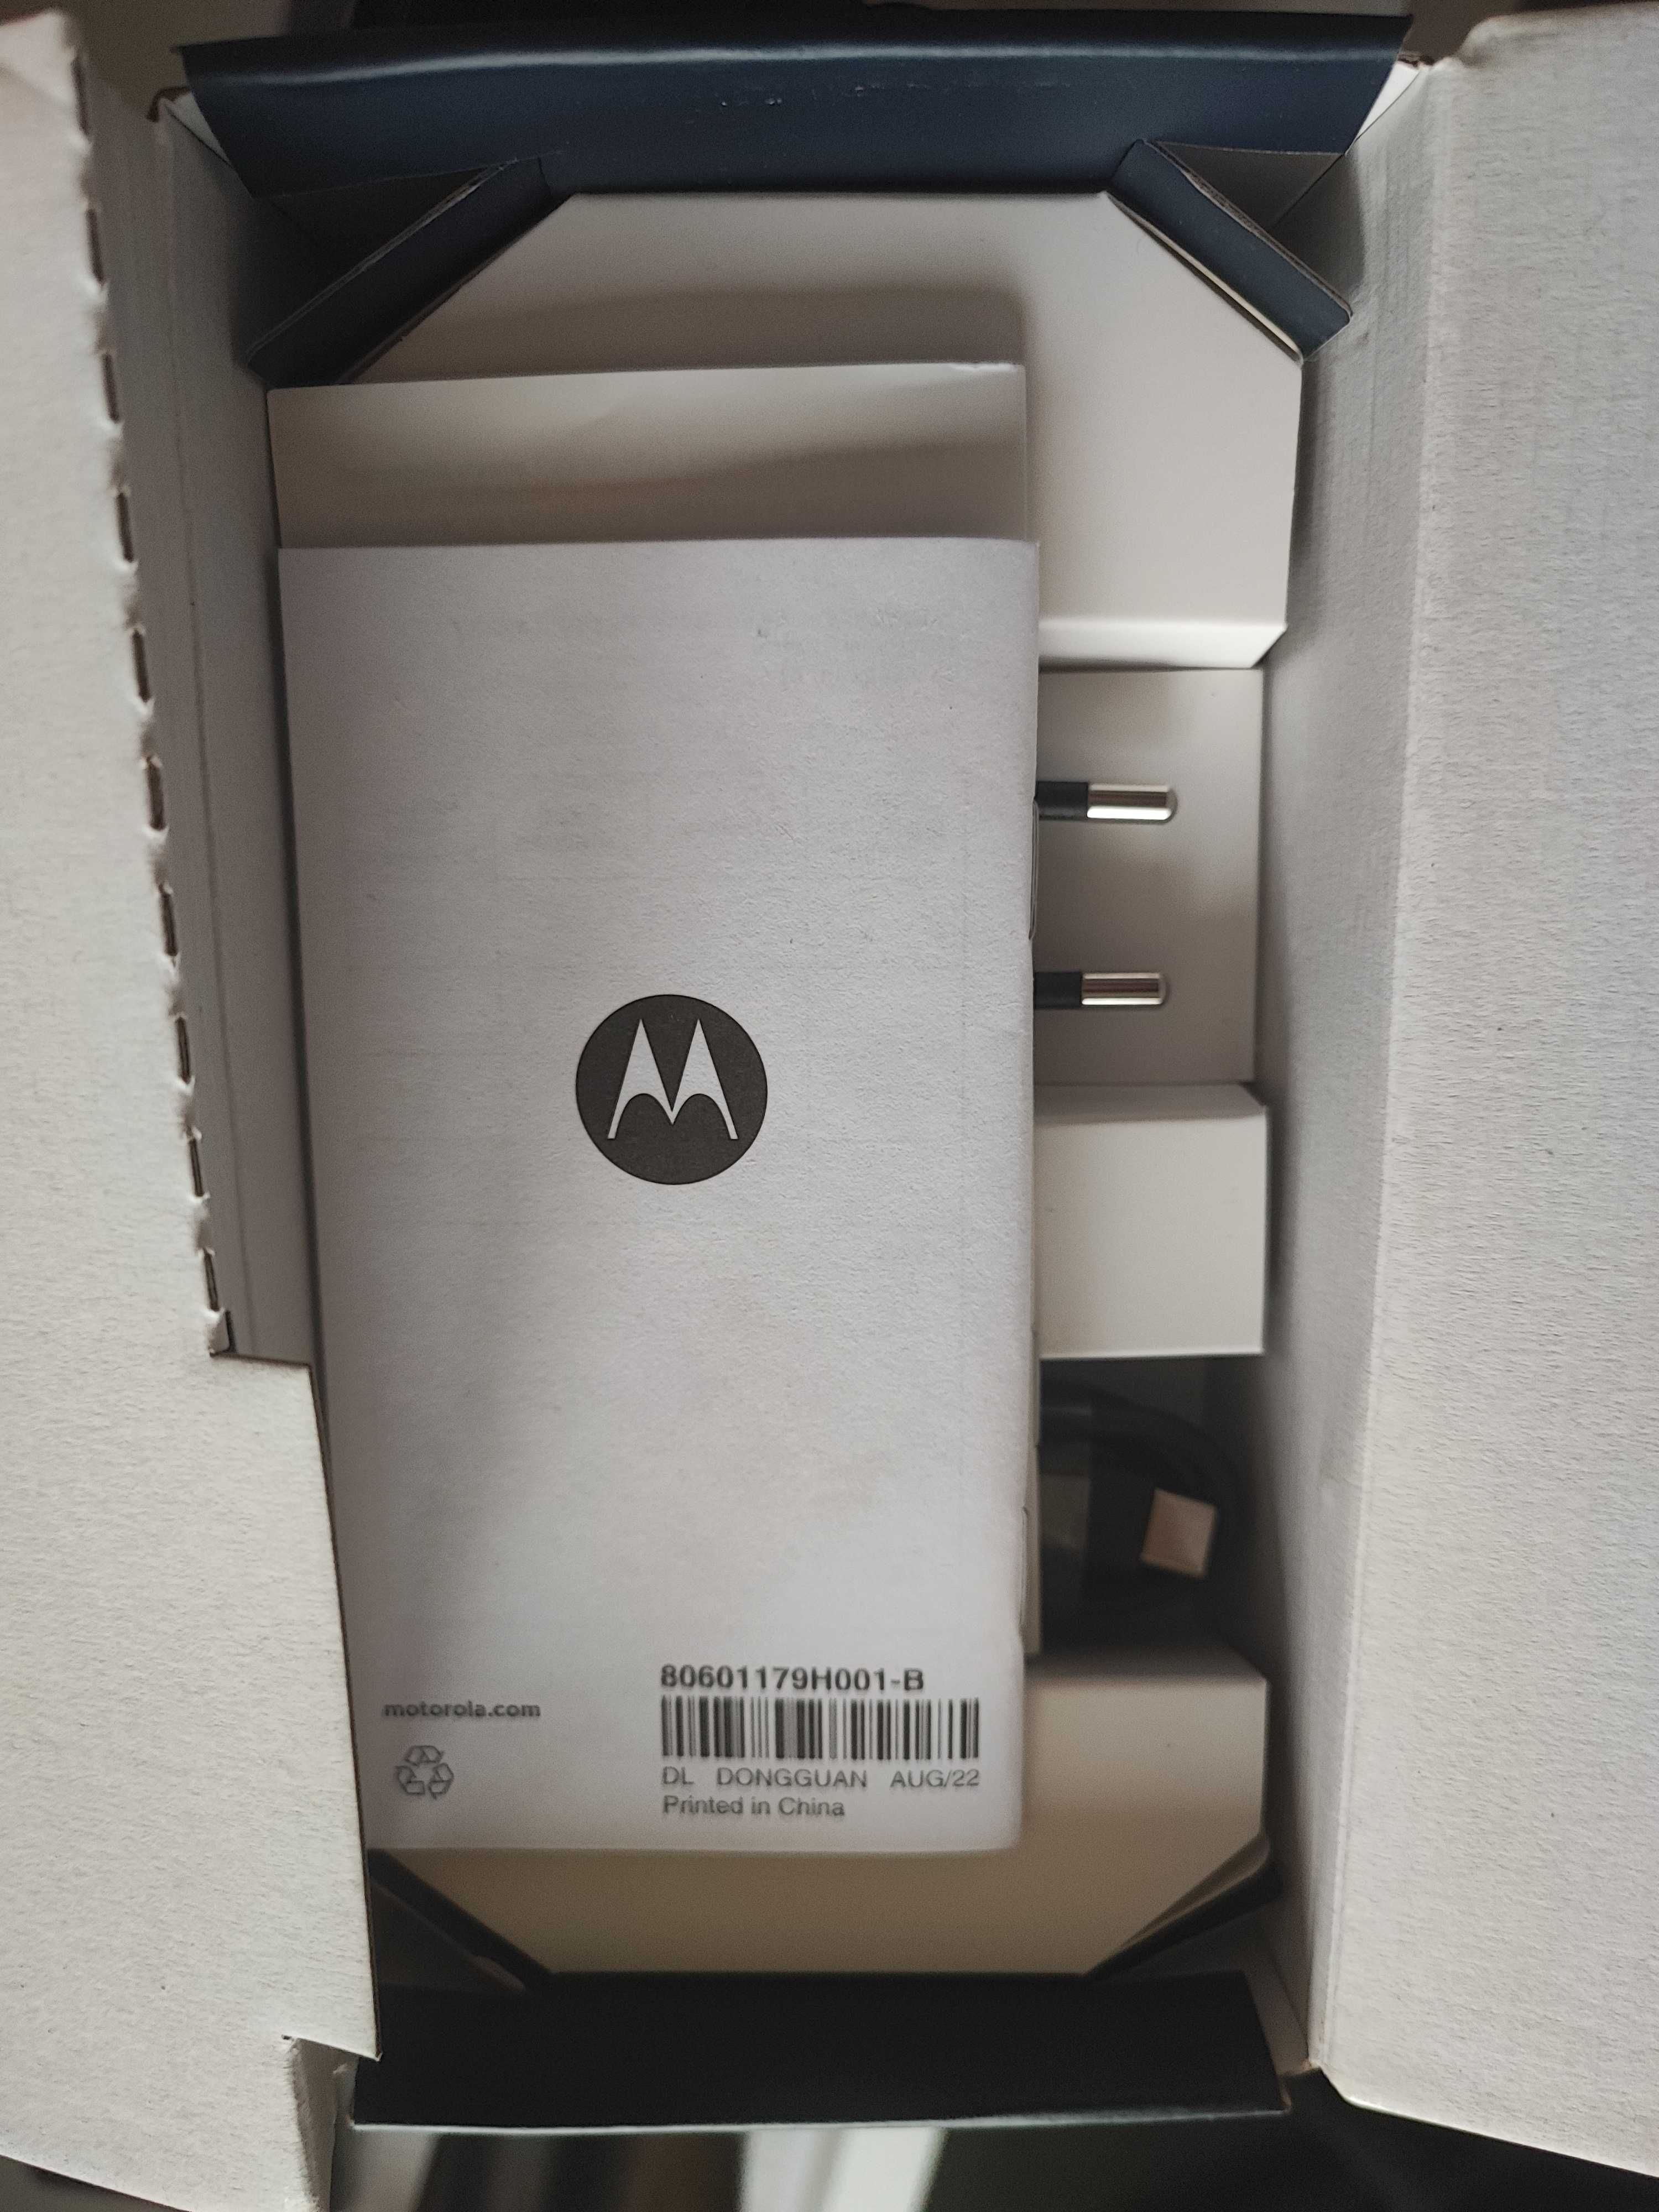 Motorola Moto E20, Nokia C21